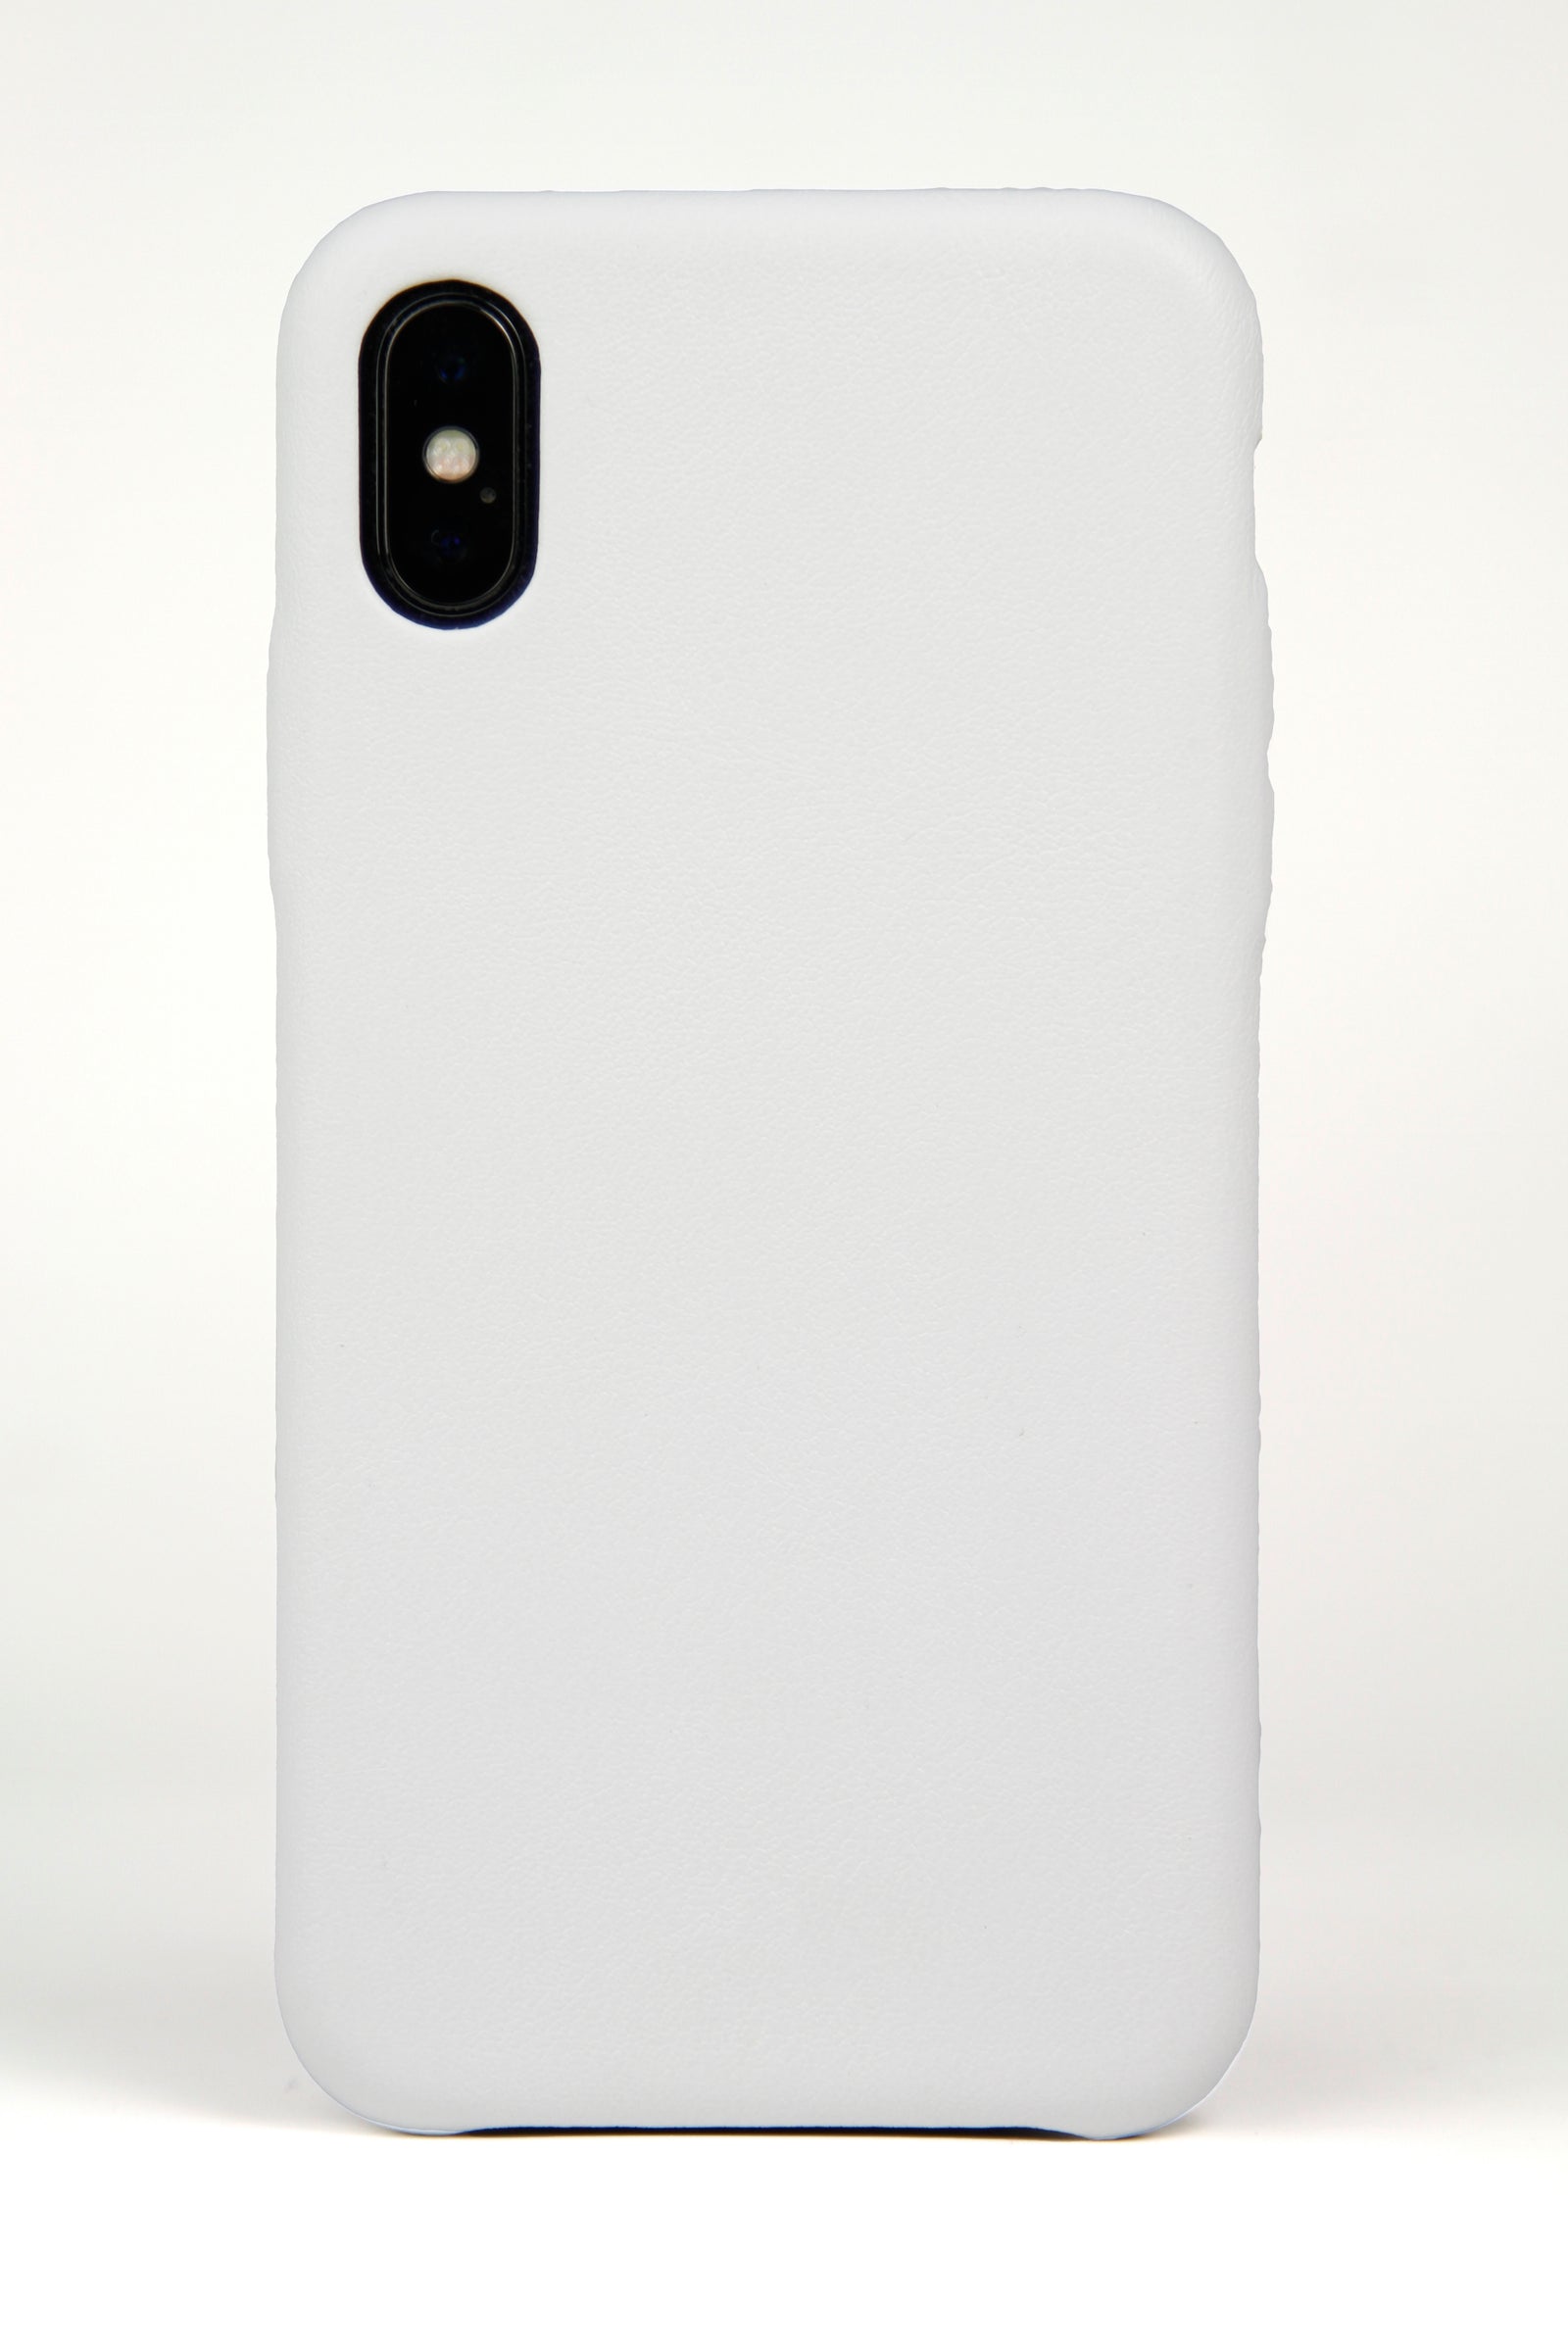 iPhone X Hülle, weißes Leder